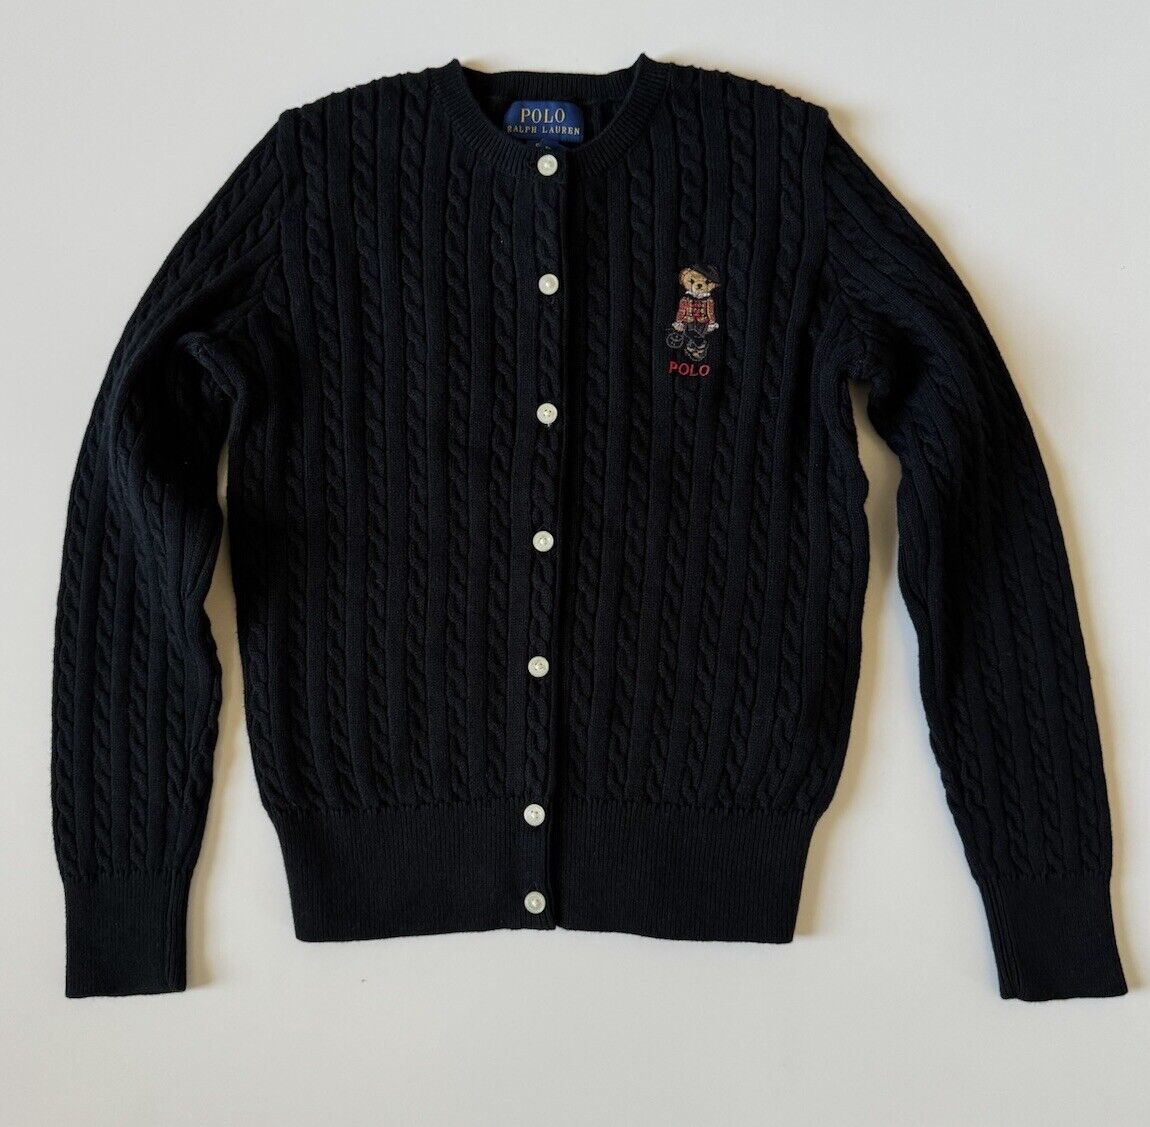 NWT Polo Ralph Lauren Bear Girl's Black Cotton Botton Sweater Size 7